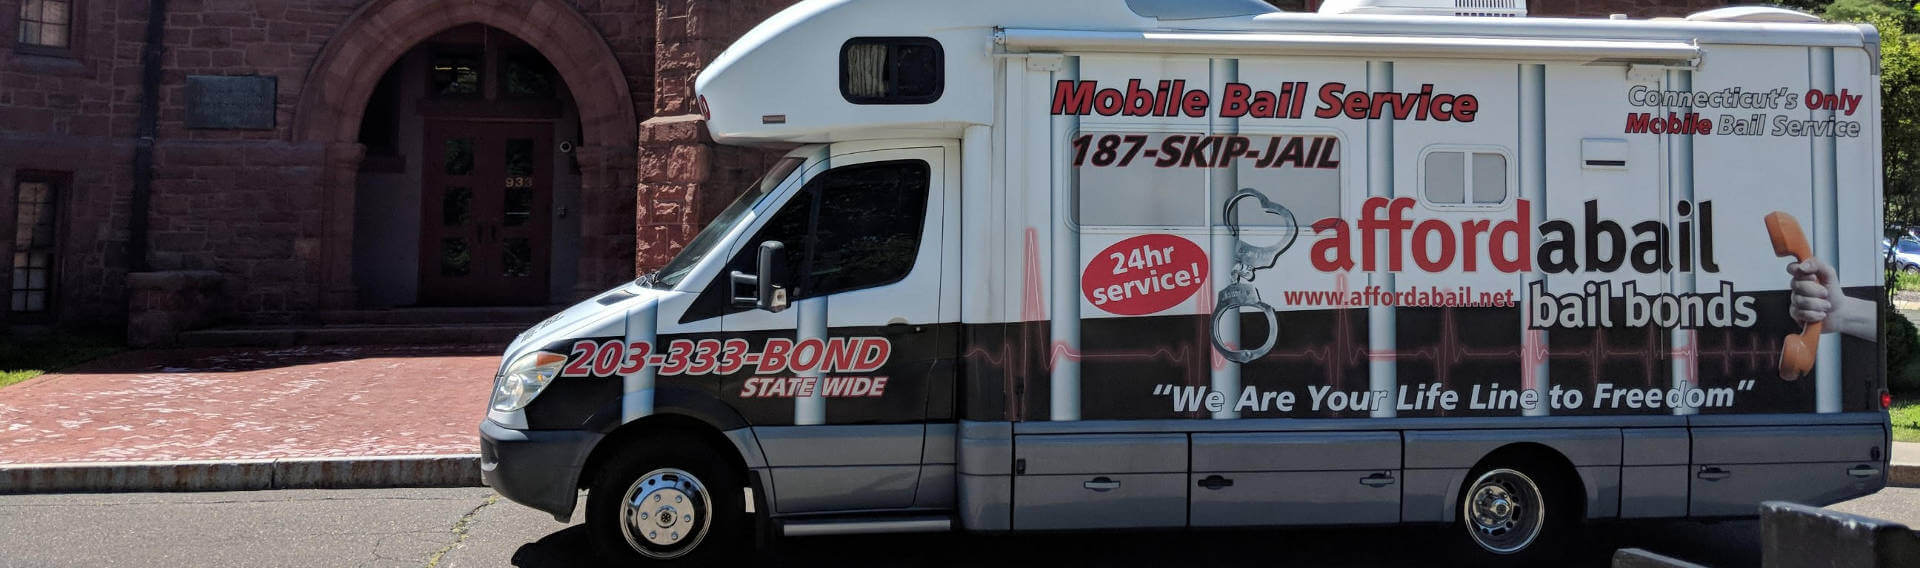 Mobile bail bonds service in Groton CT